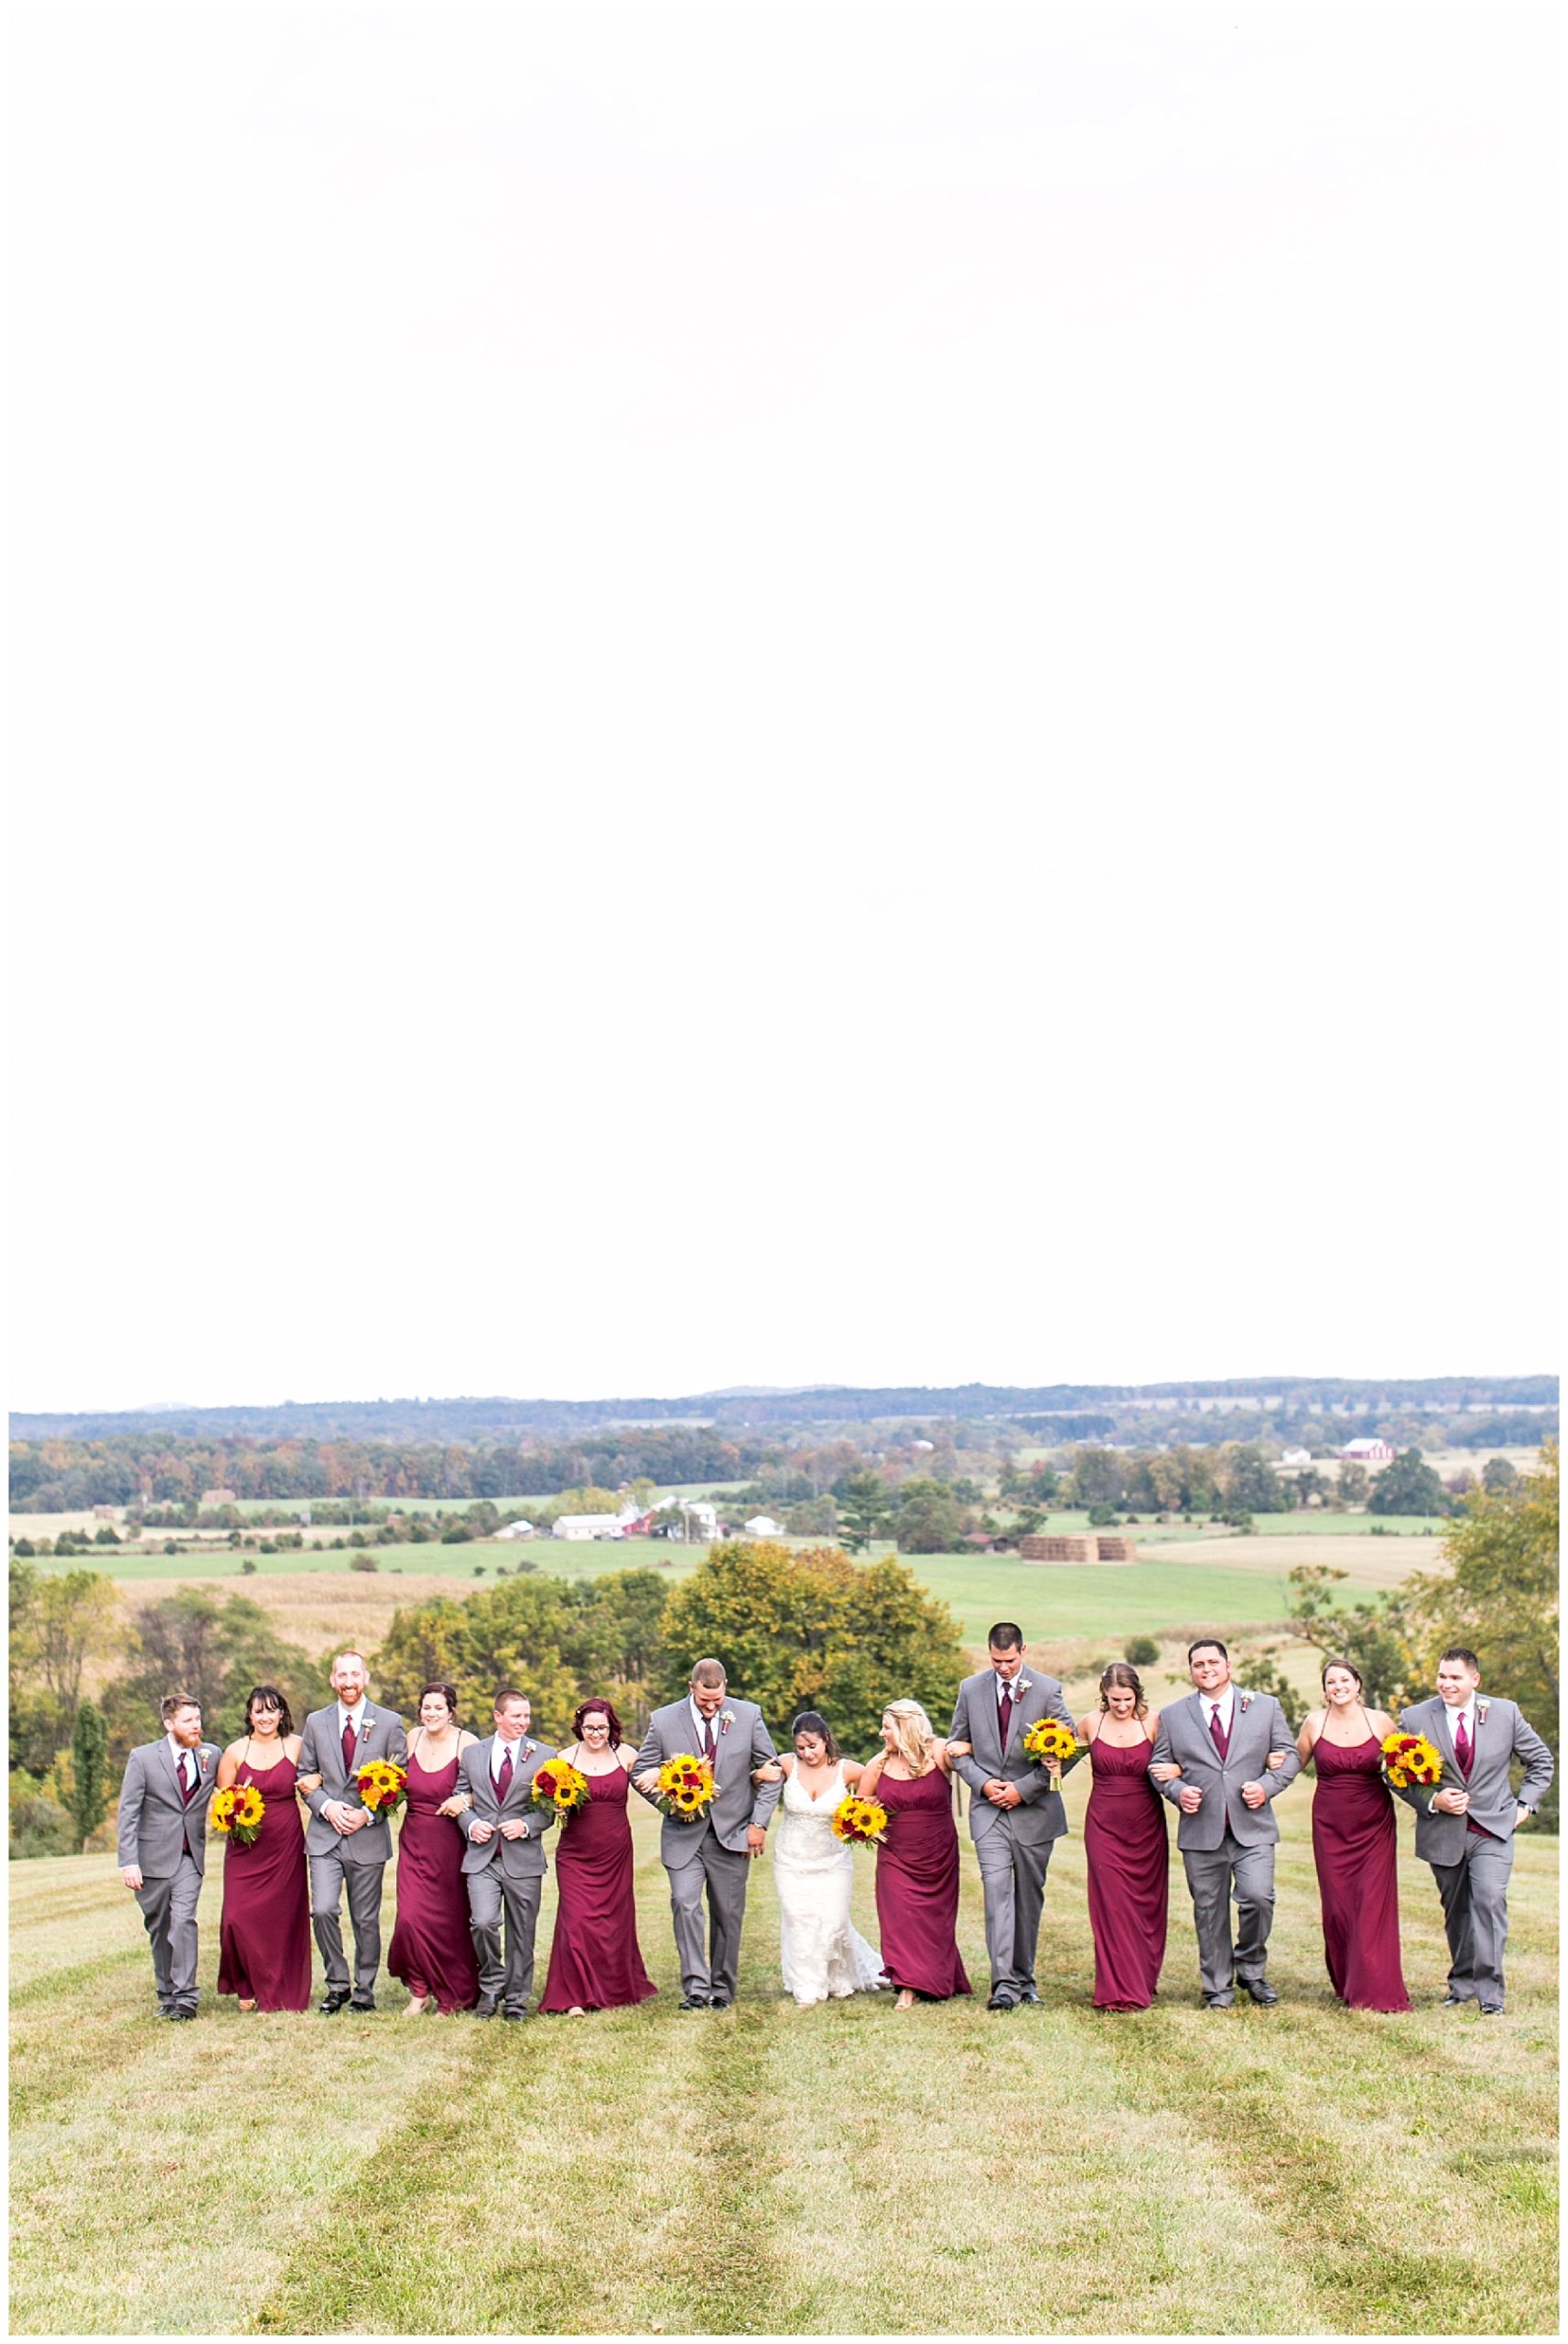 M+K Lodges at Gettysburg Wedding LivingRadiantPhotographyphotos_0023.jpg